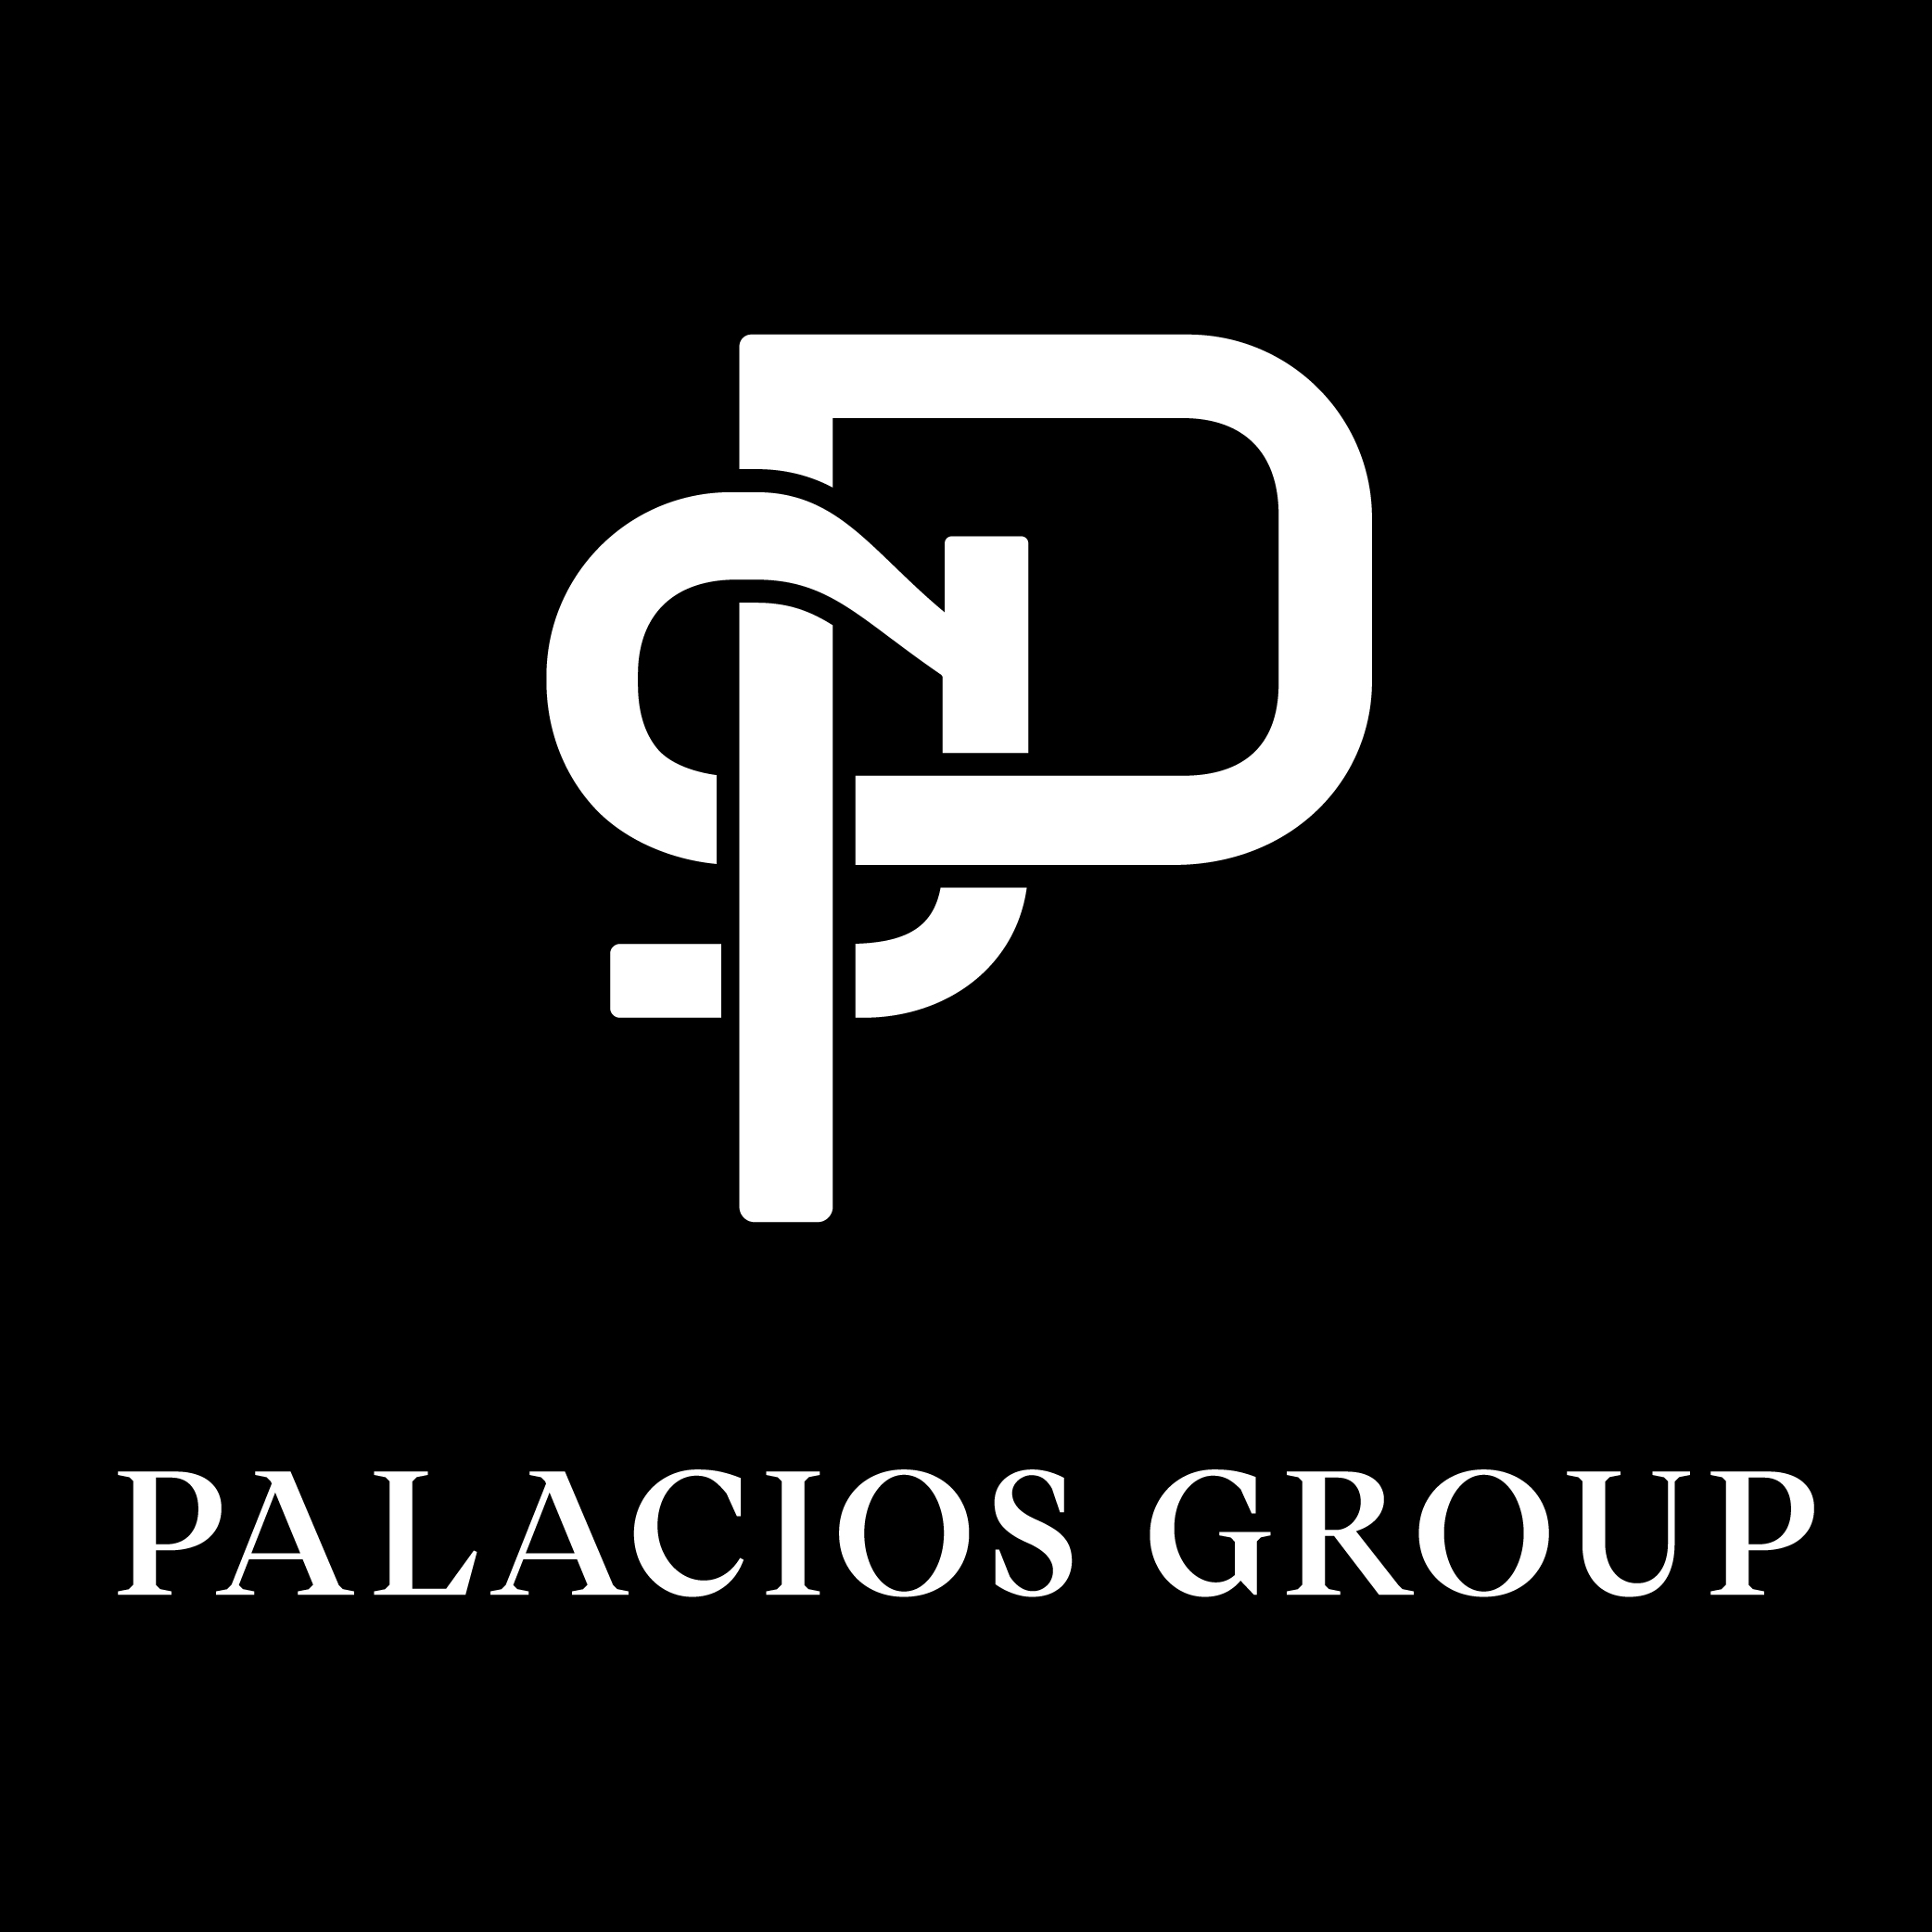 The Palacios Group